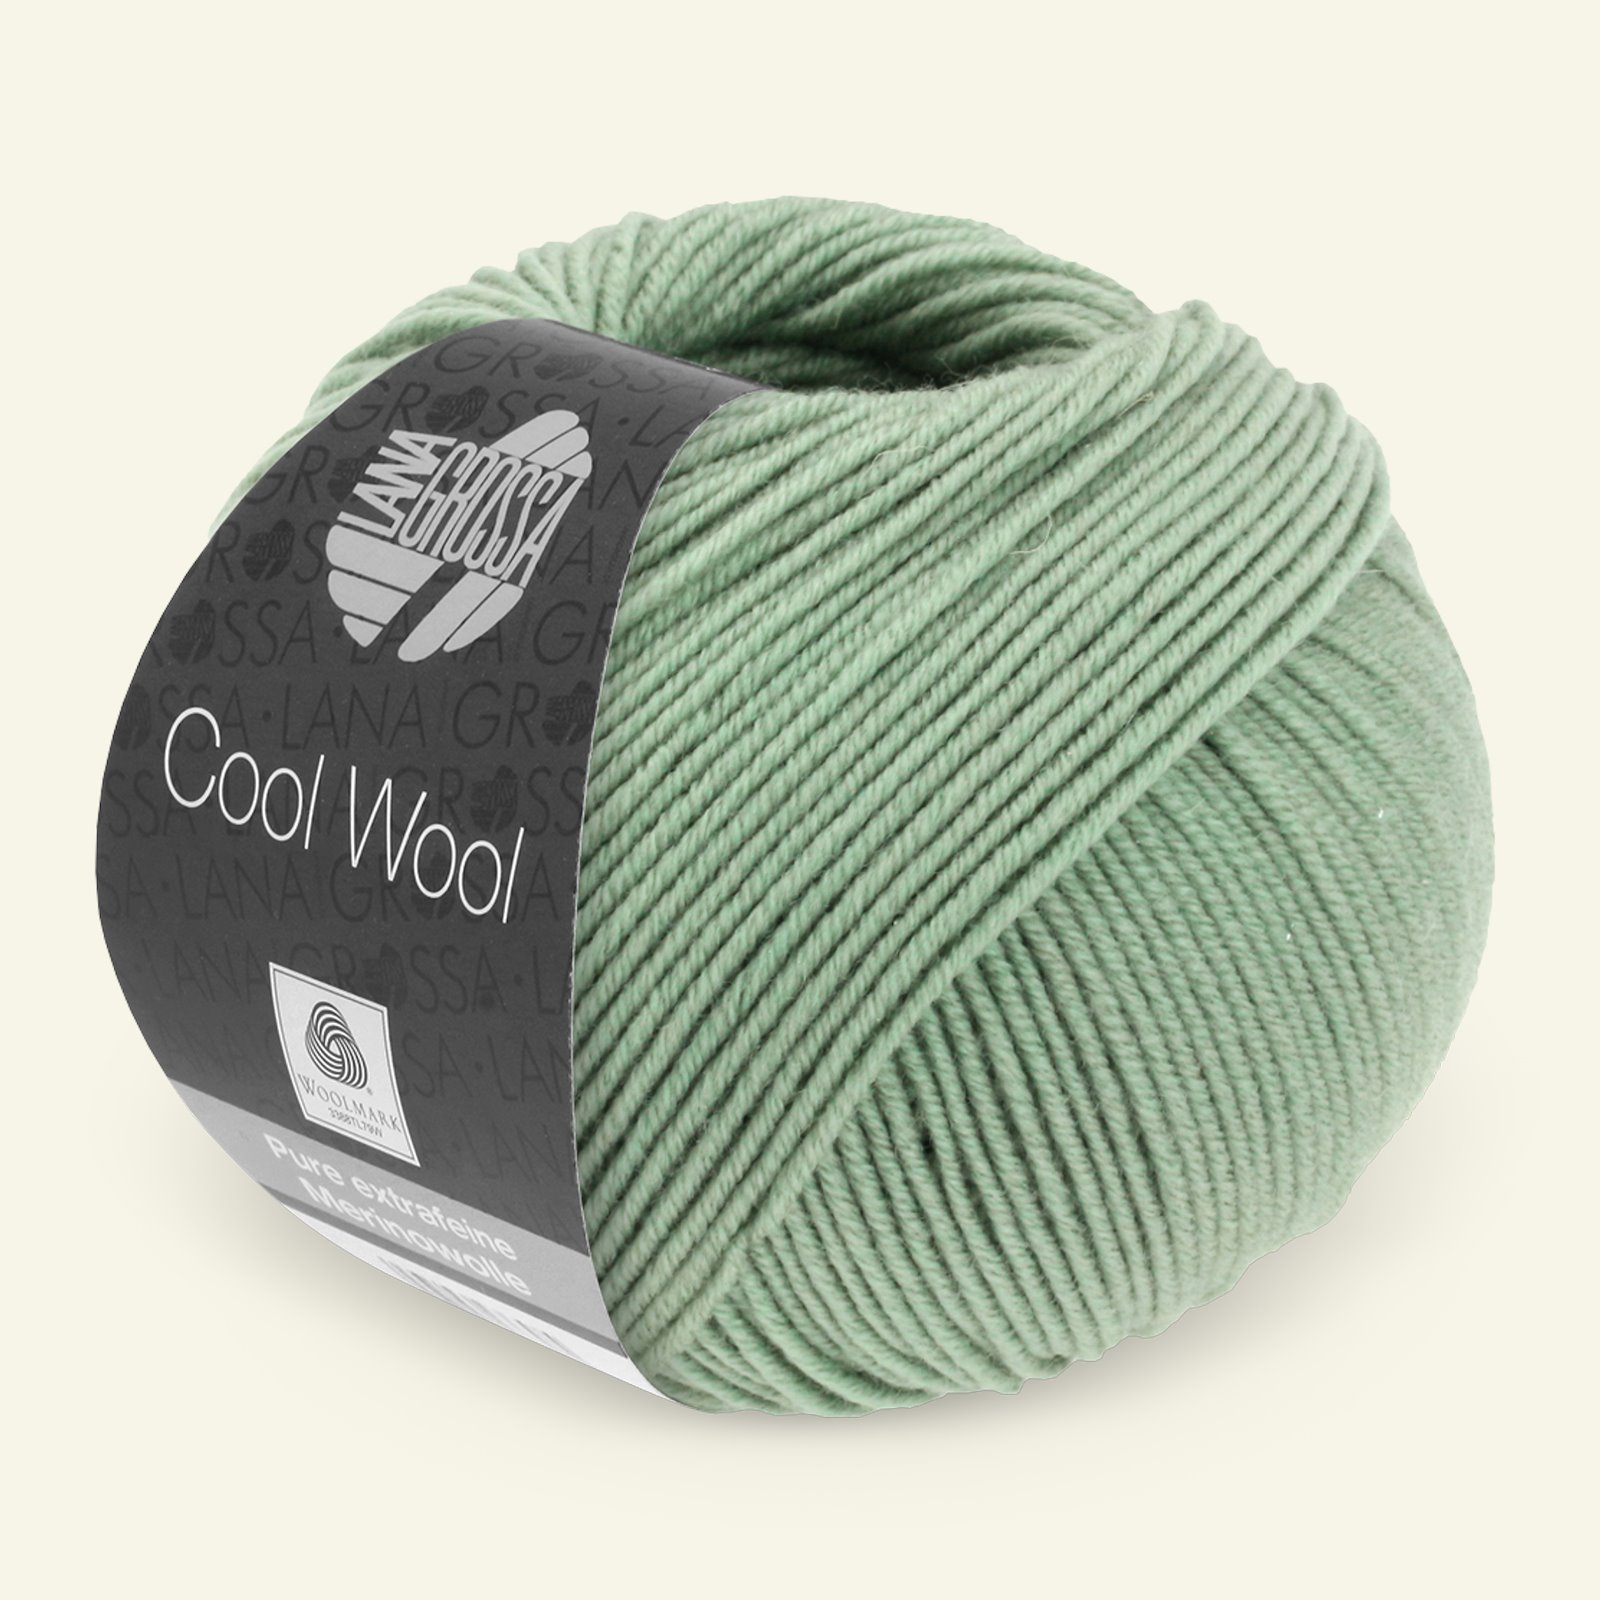 Lana Grossa, extrafine merino wool yarn "Cool Wool", aqua green 90001127_pack